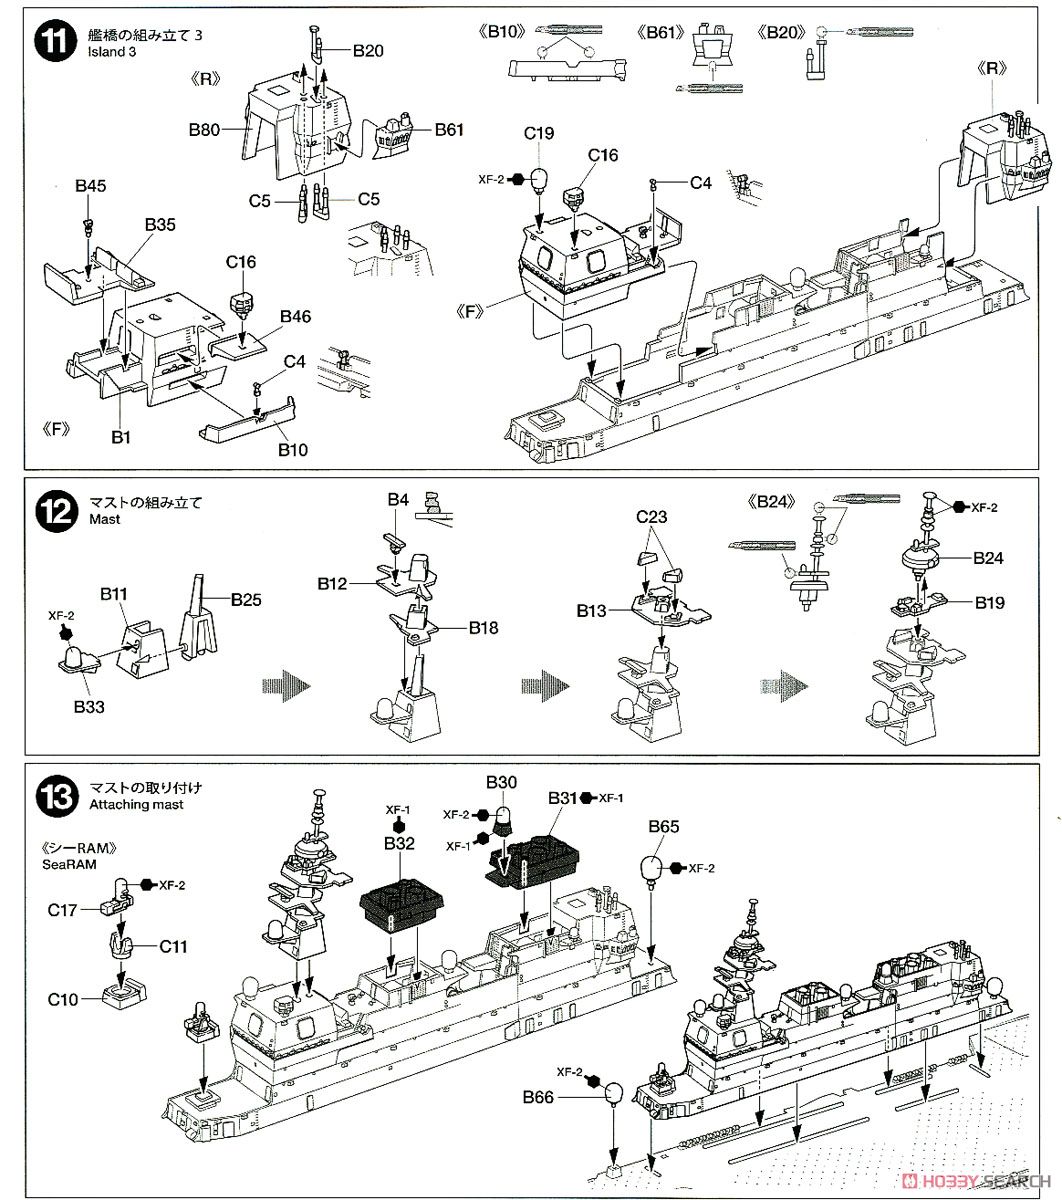 DDV192 空母いぶき (プラモデル) 設計図5